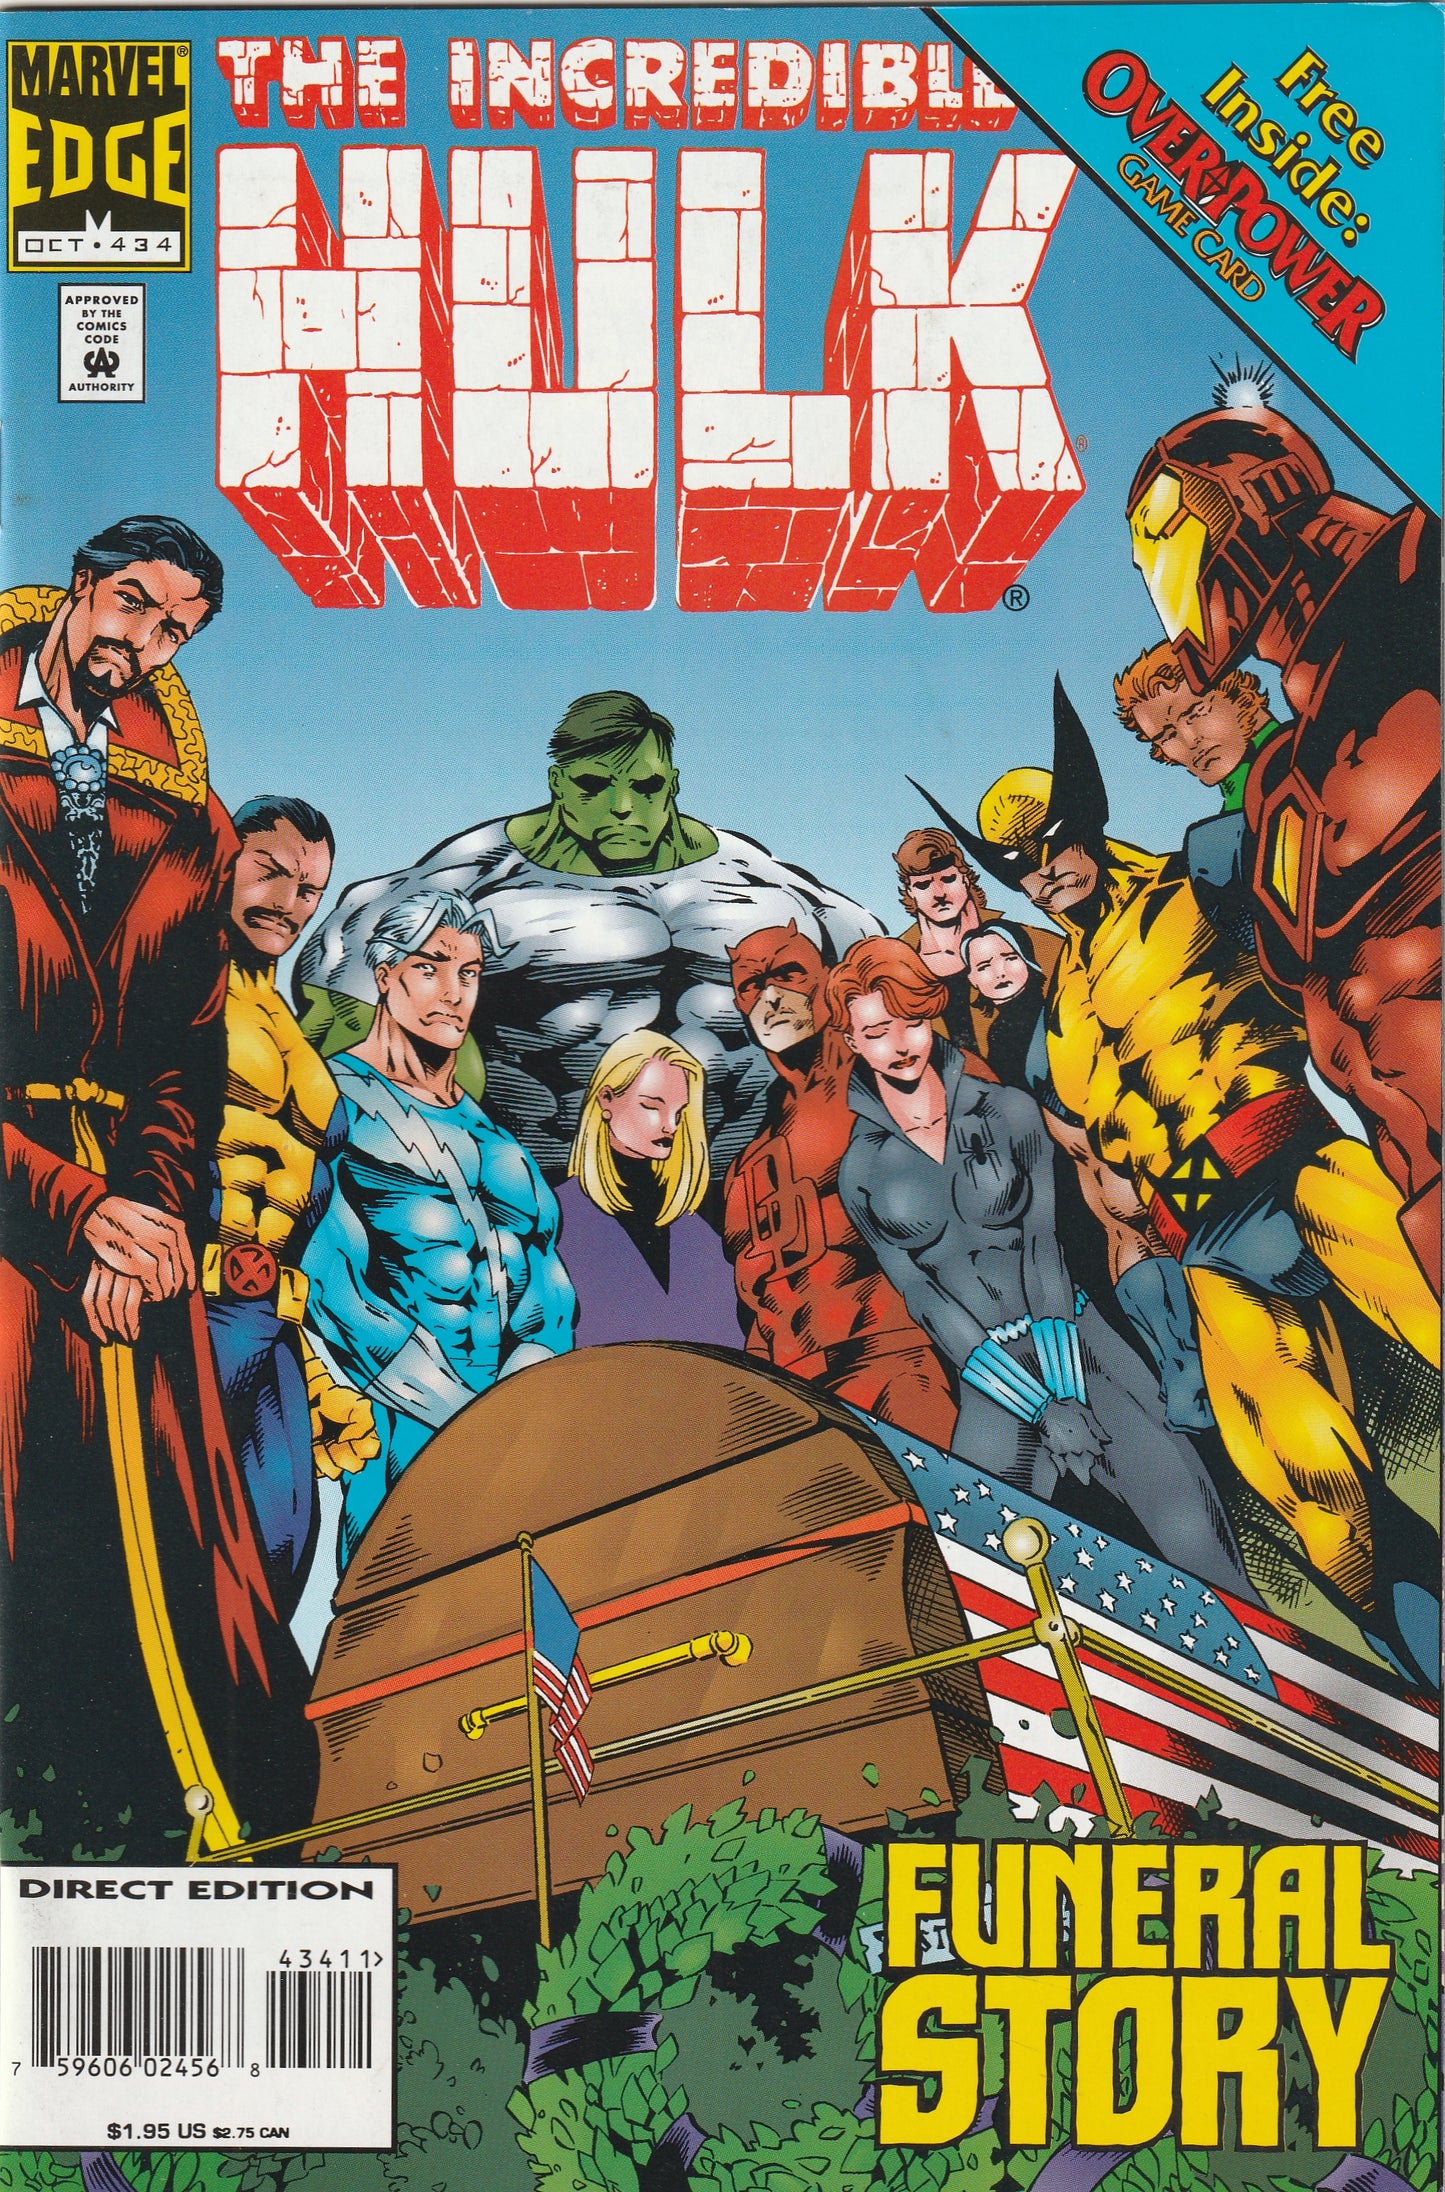 Incredible Hulk #434 (1995) - Funeral for Nick Fury